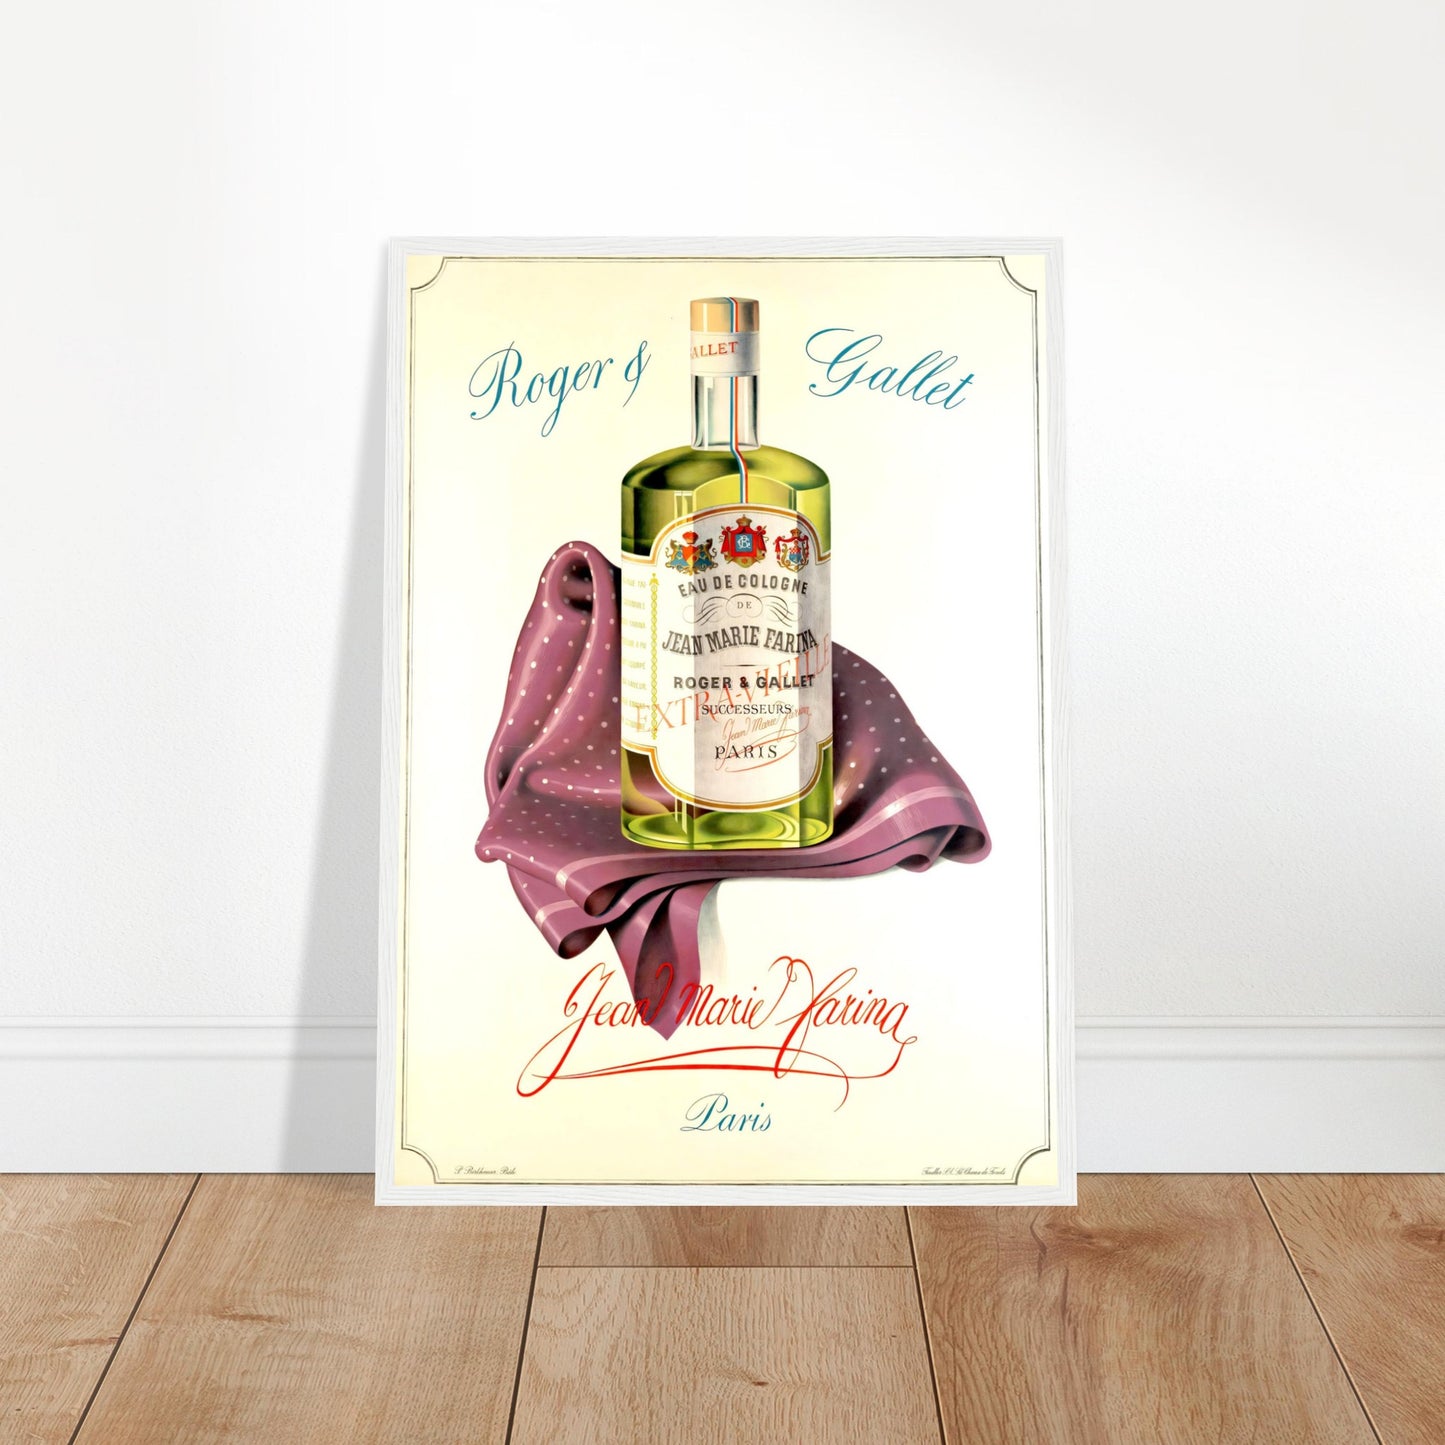 Vintage Poster Reprint, Parfume, Wall Art on Premium Paper - Posterify